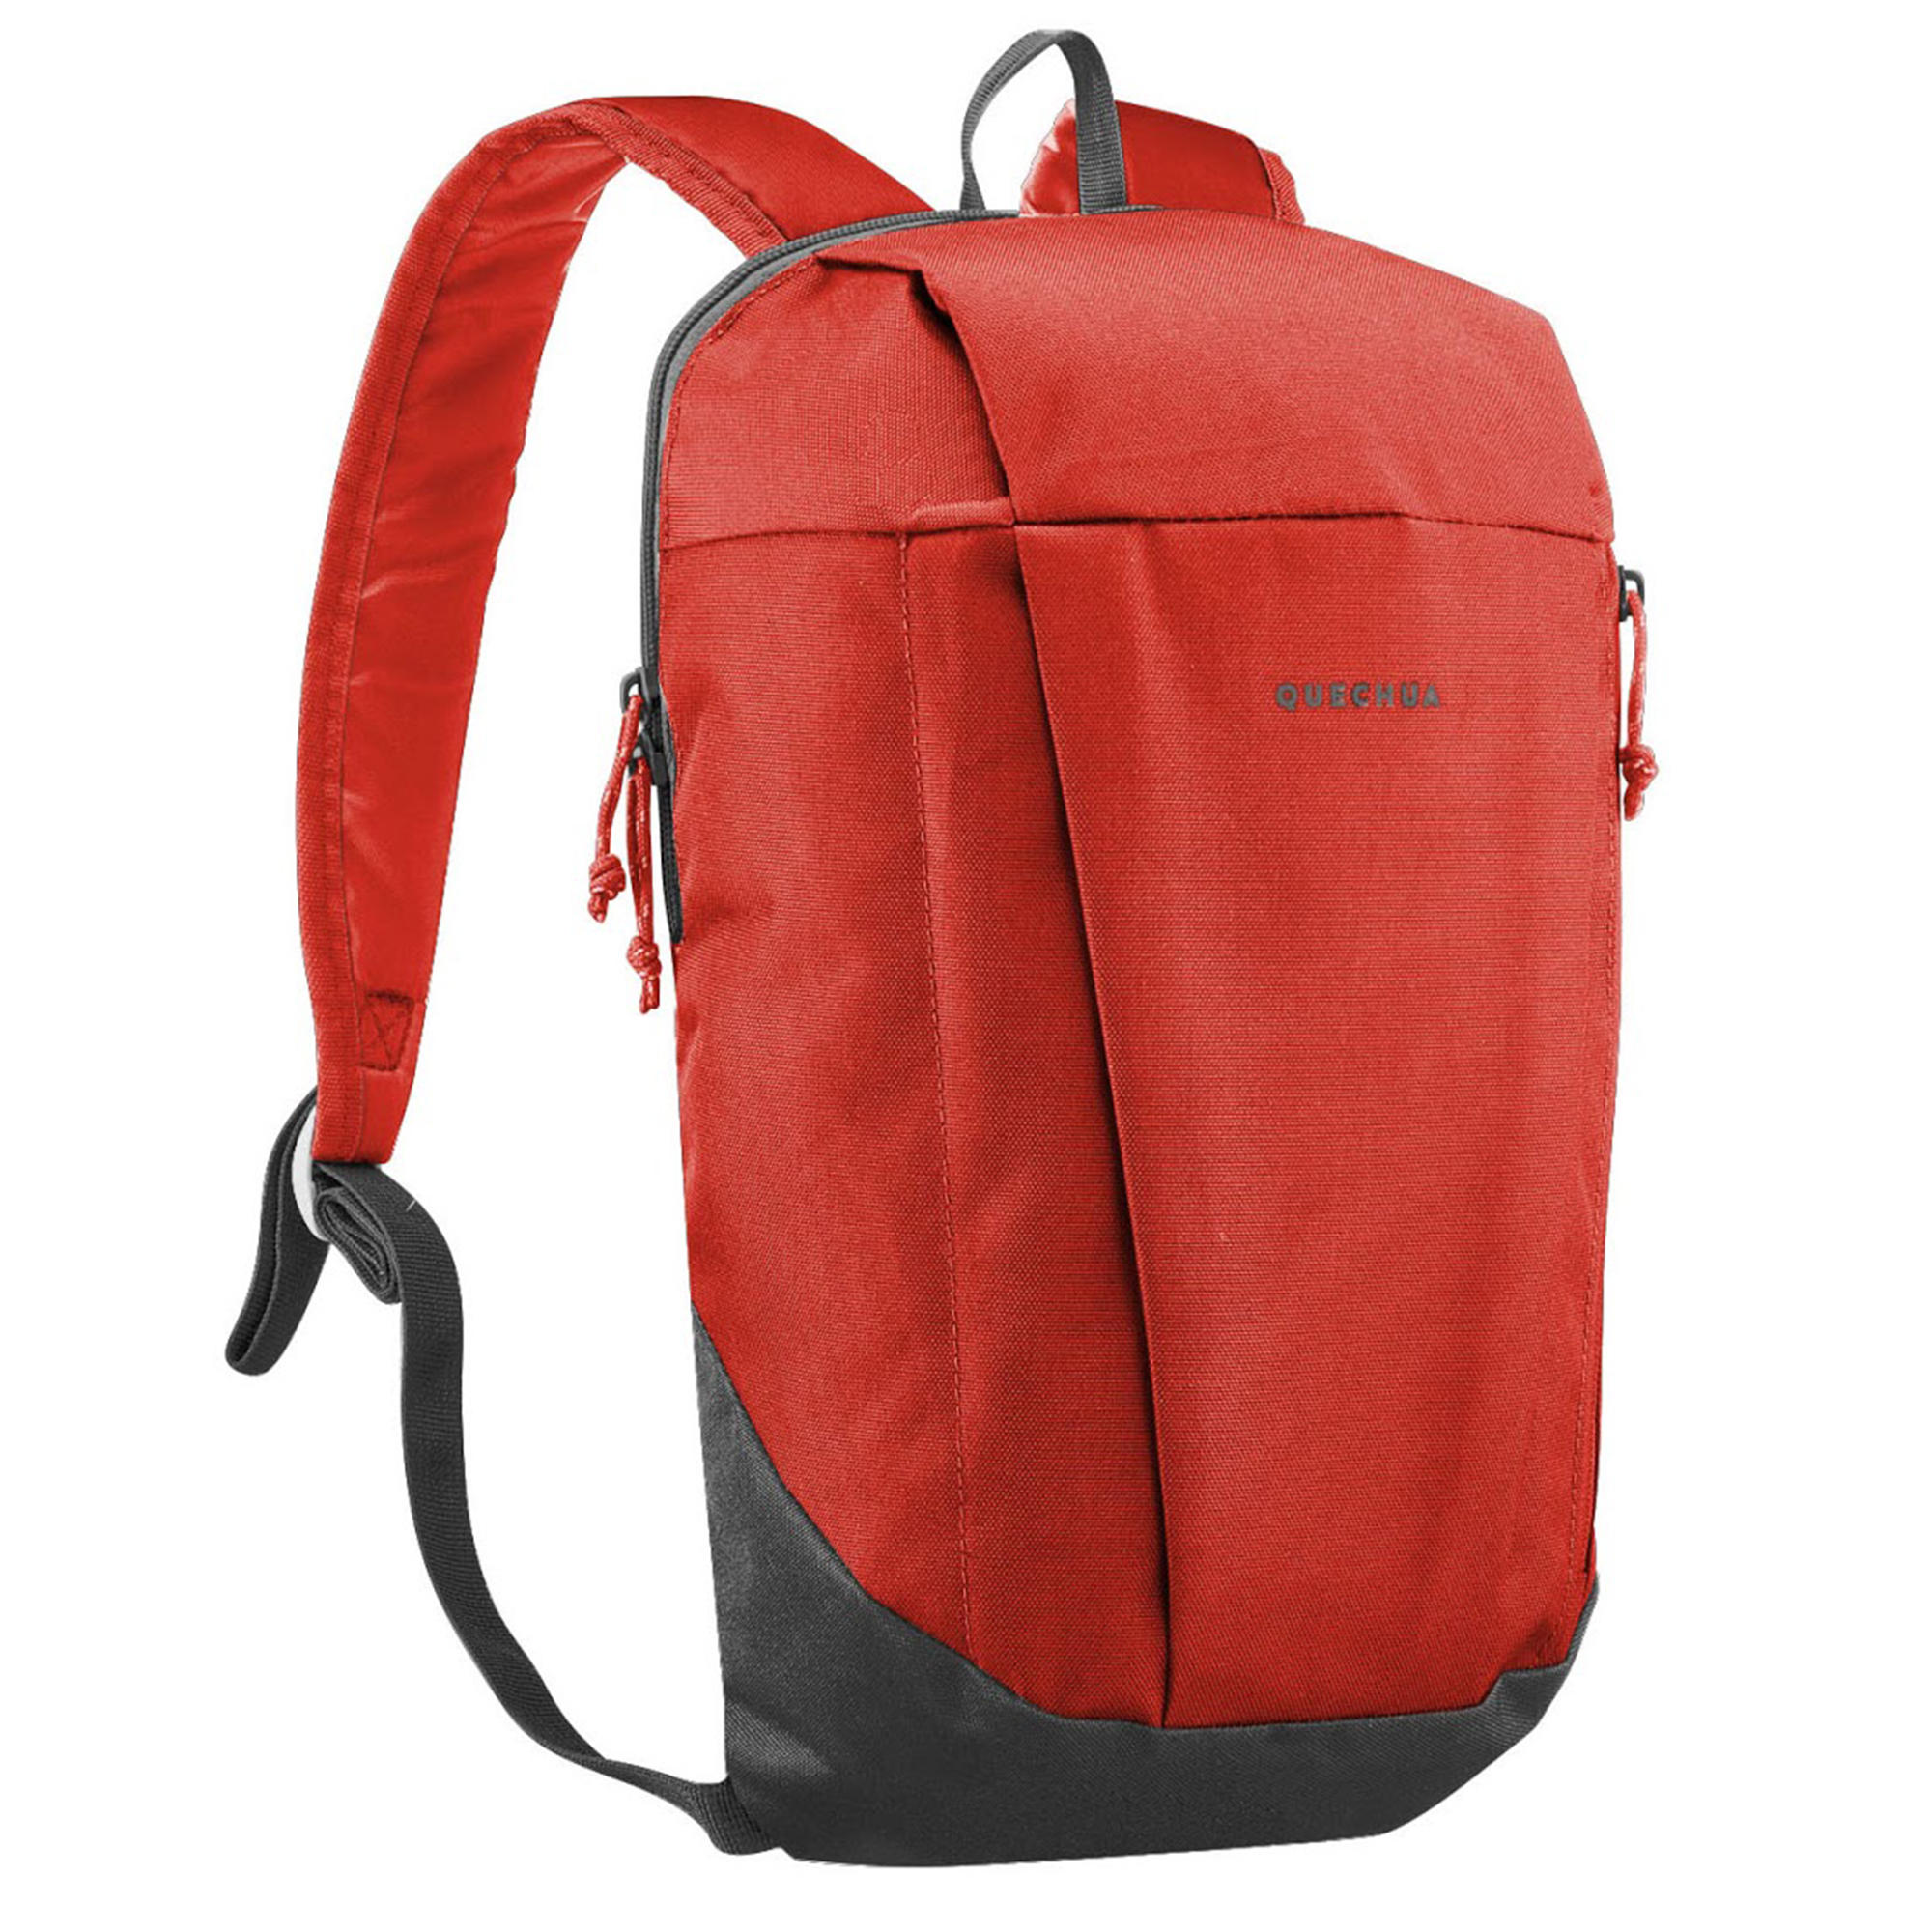 Decathlon Fabric 10 Ltr Red School Backpack : Amazon.in: Fashion